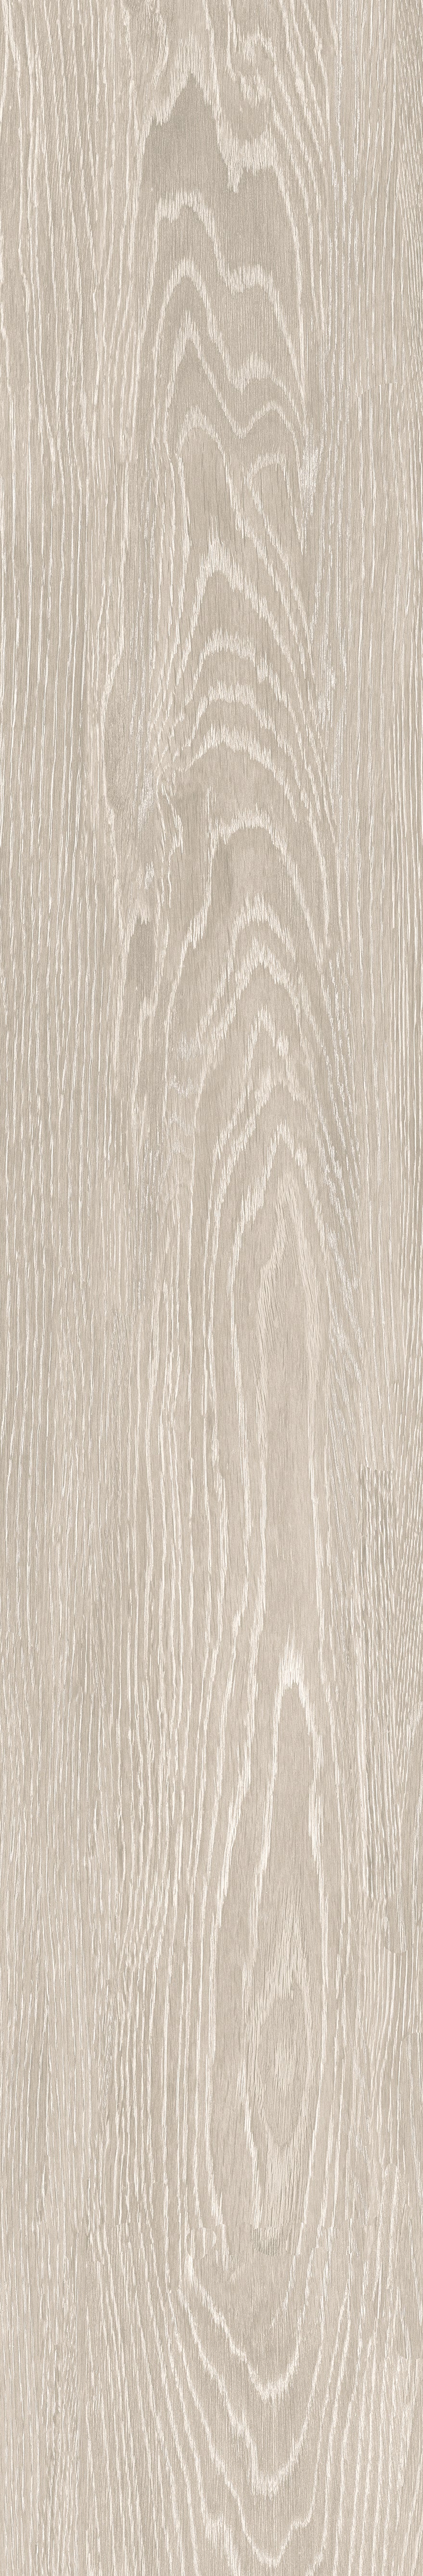 Giania 木紋磚 Bm122802m